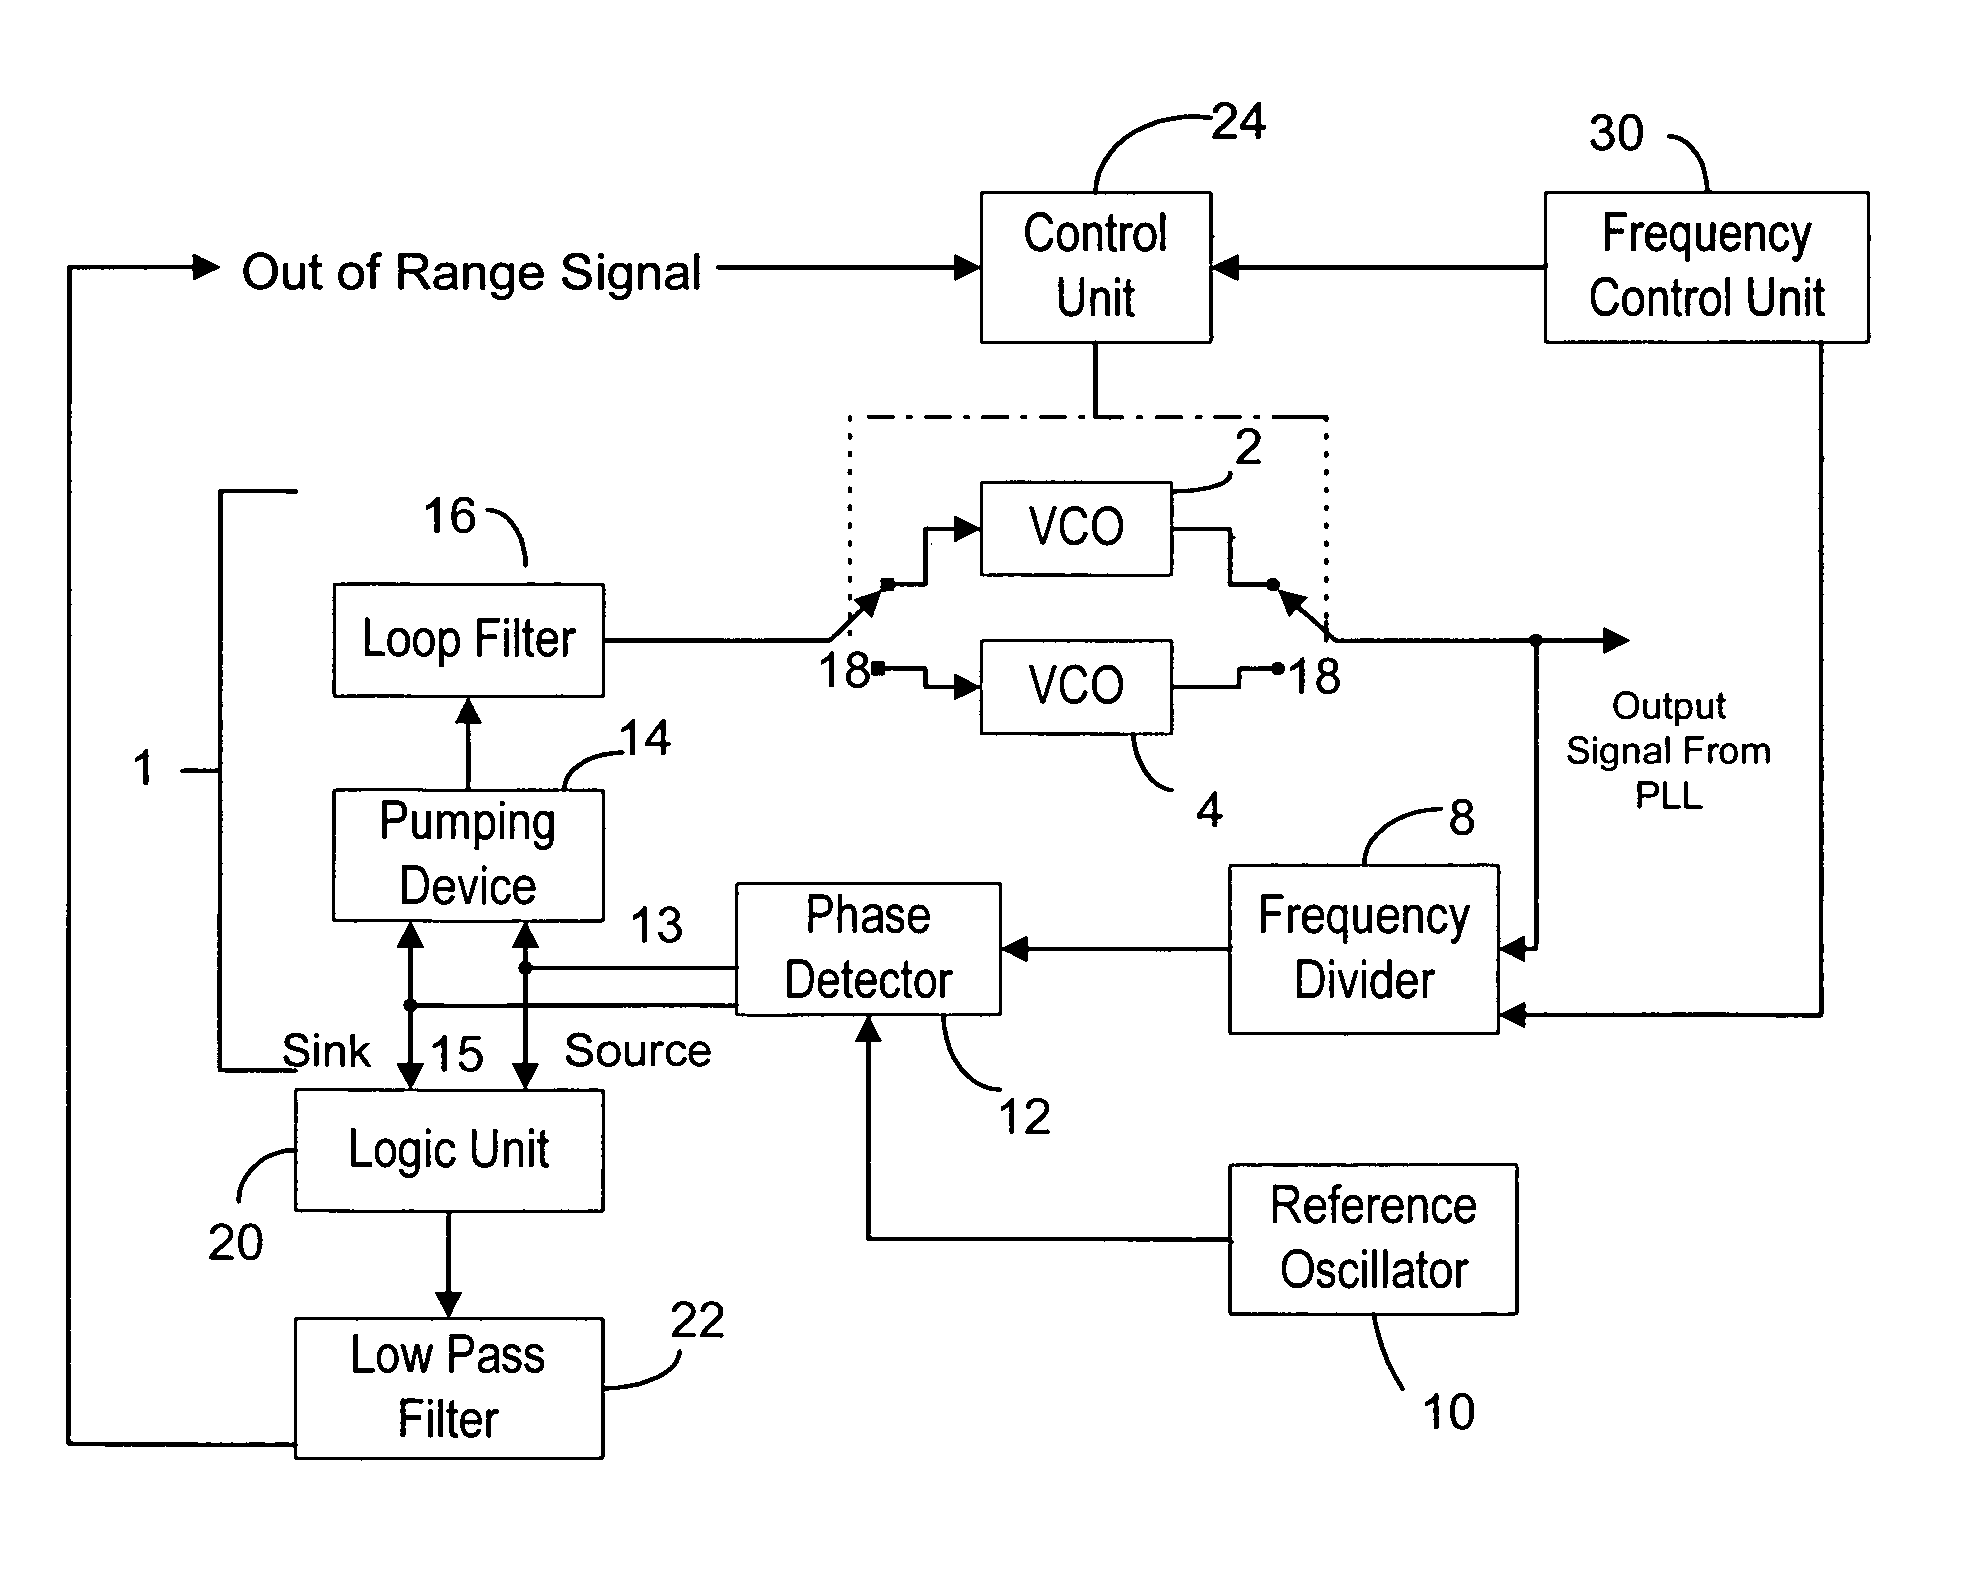 Radio transceiver having a phase-locked loop circuit